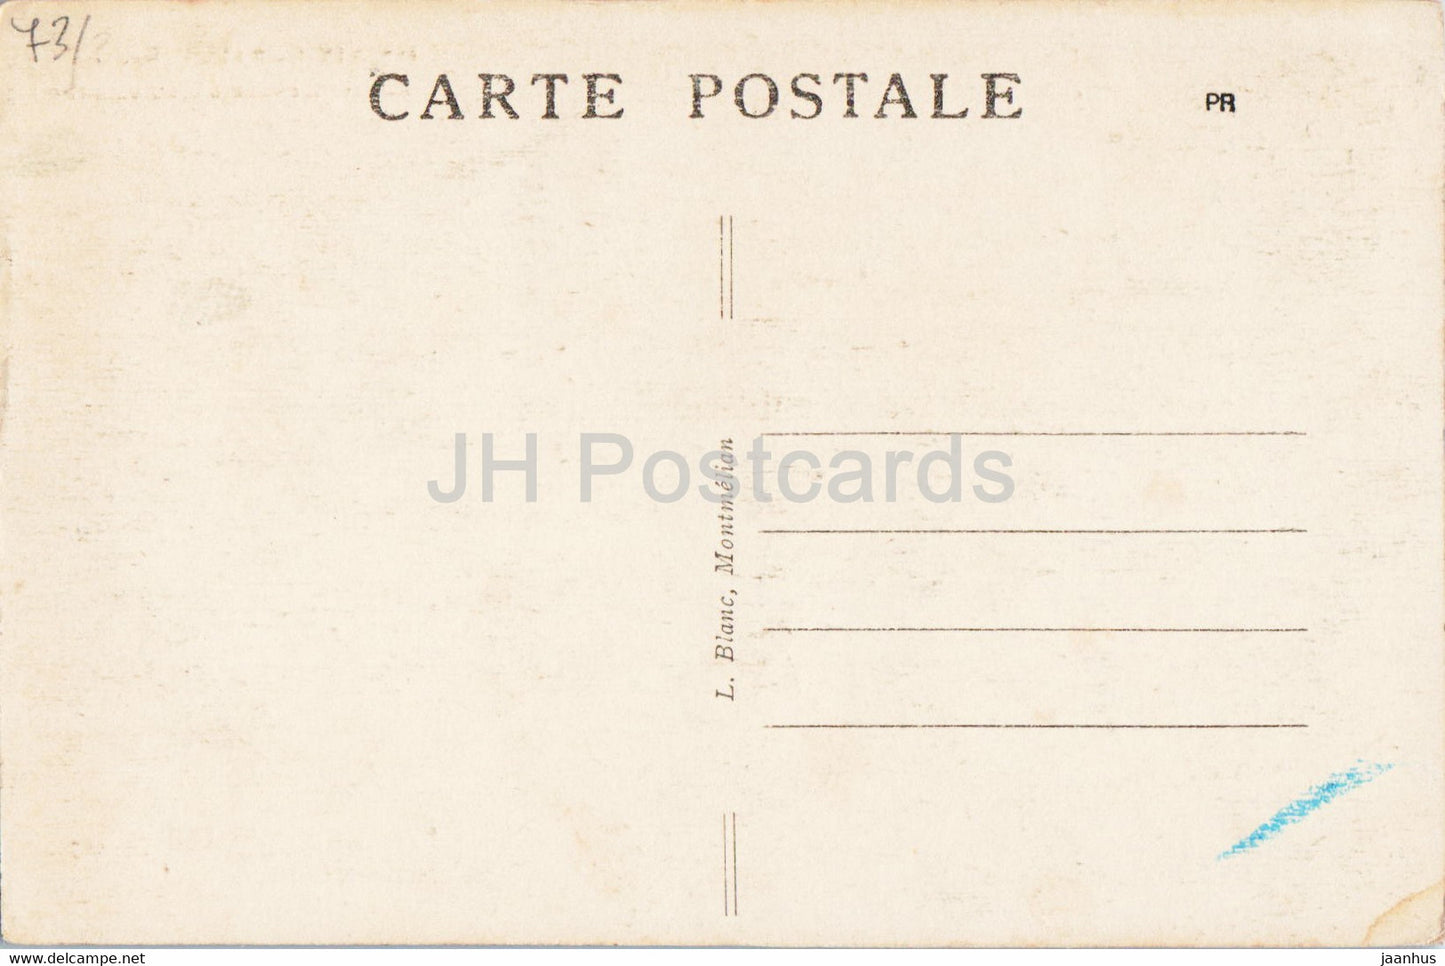 Aix les Bains - Royale Abbaye d'Hautecombe - 887 - old postcard - France - unused